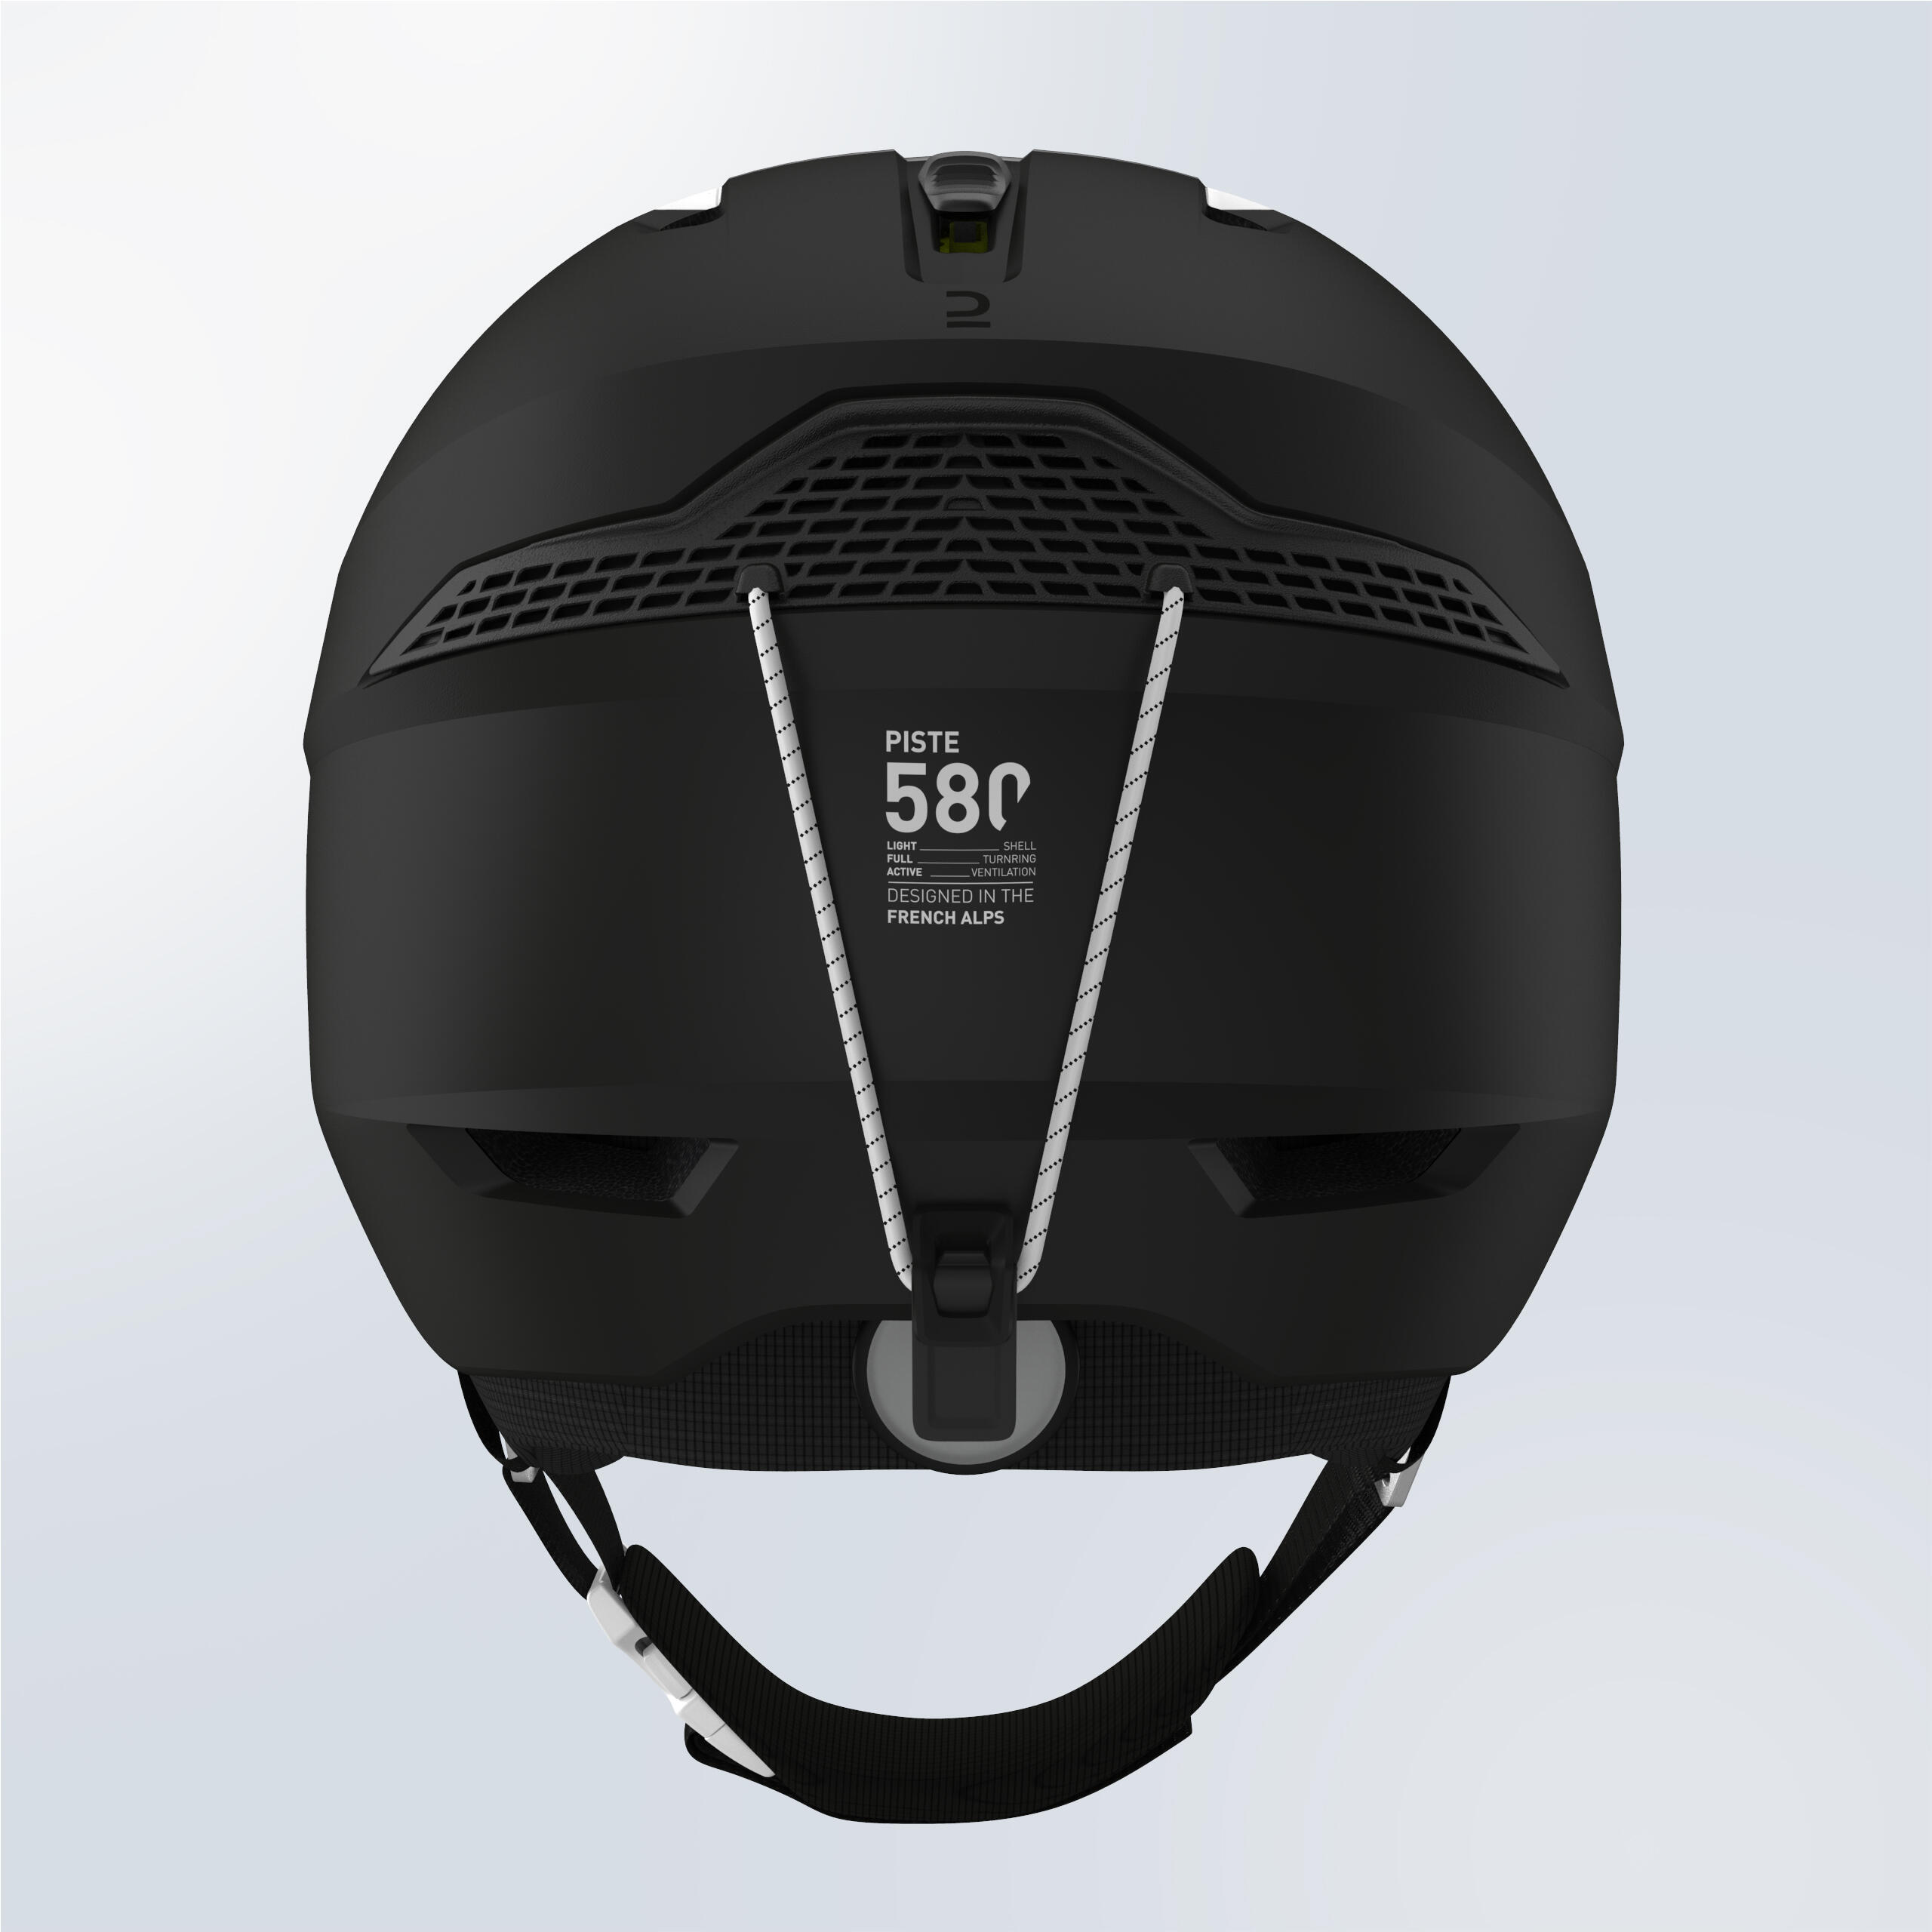 Ski Helmet - PST 580 Black/White - WEDZE